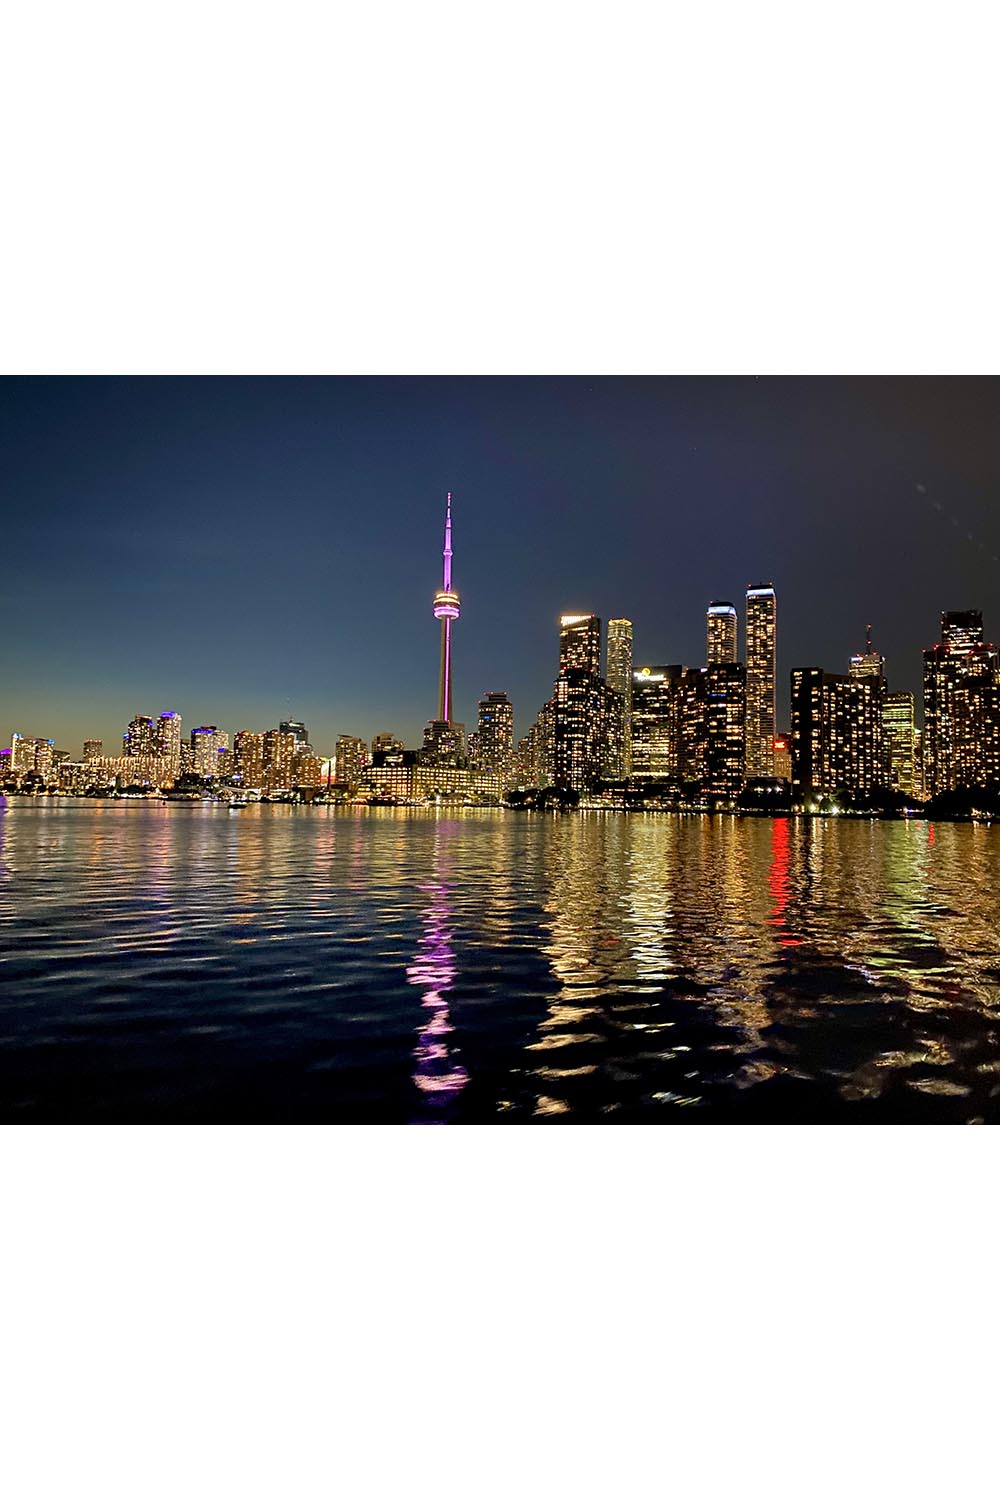 SAH_Toronto-skyline_FULL